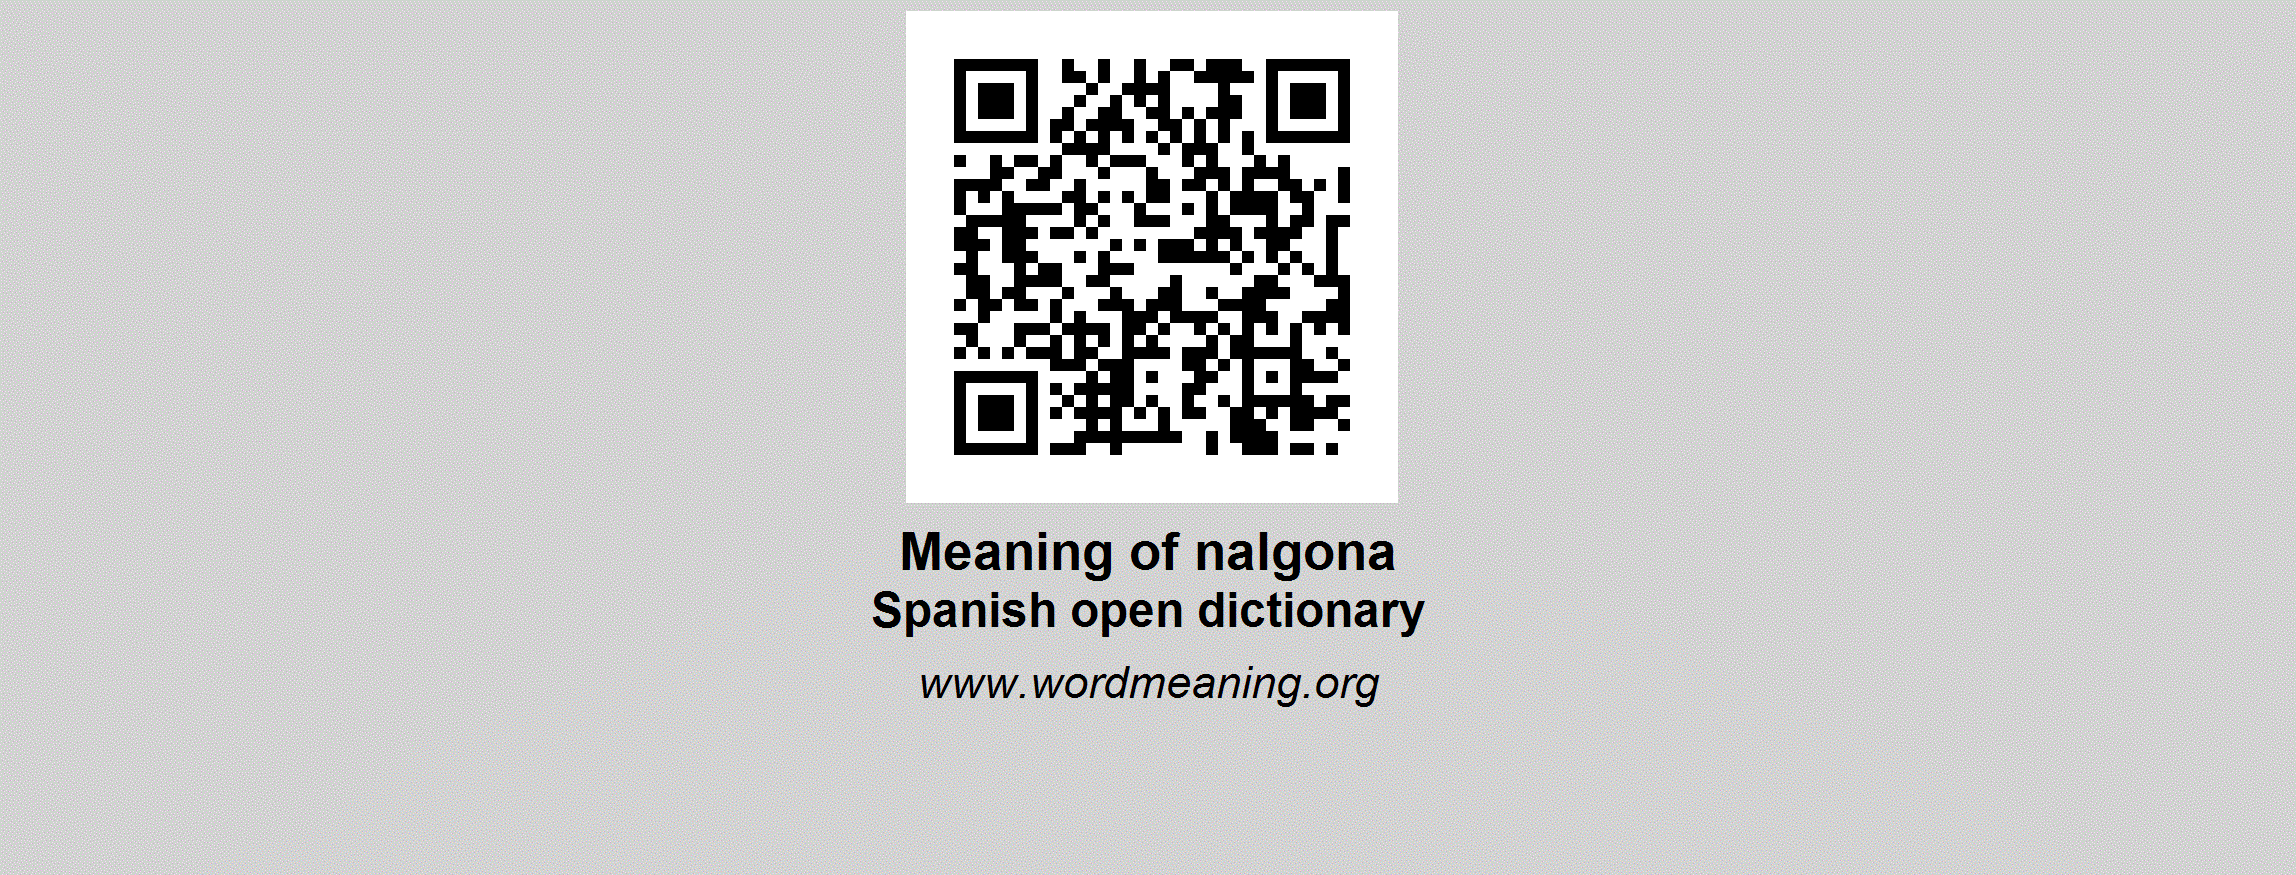 Nalgona means